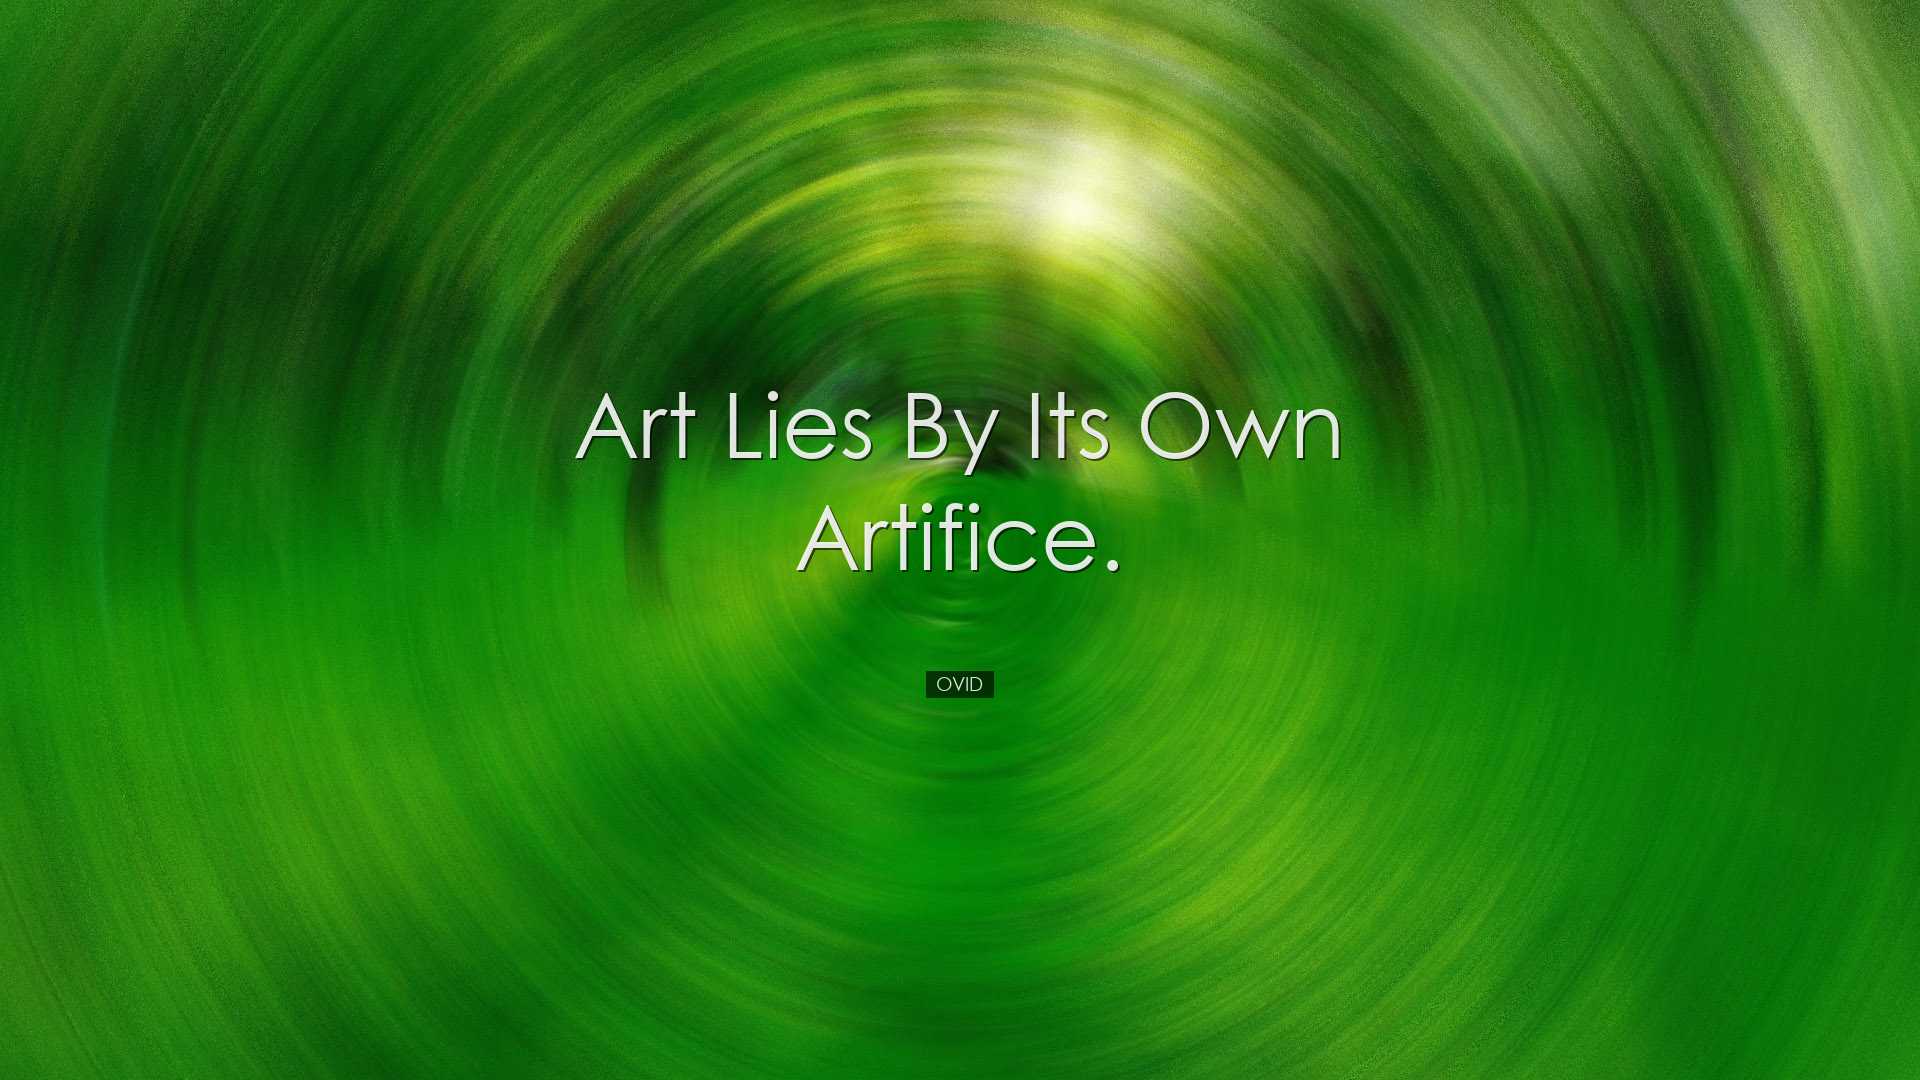 Art lies by its own artifice. - Ovid